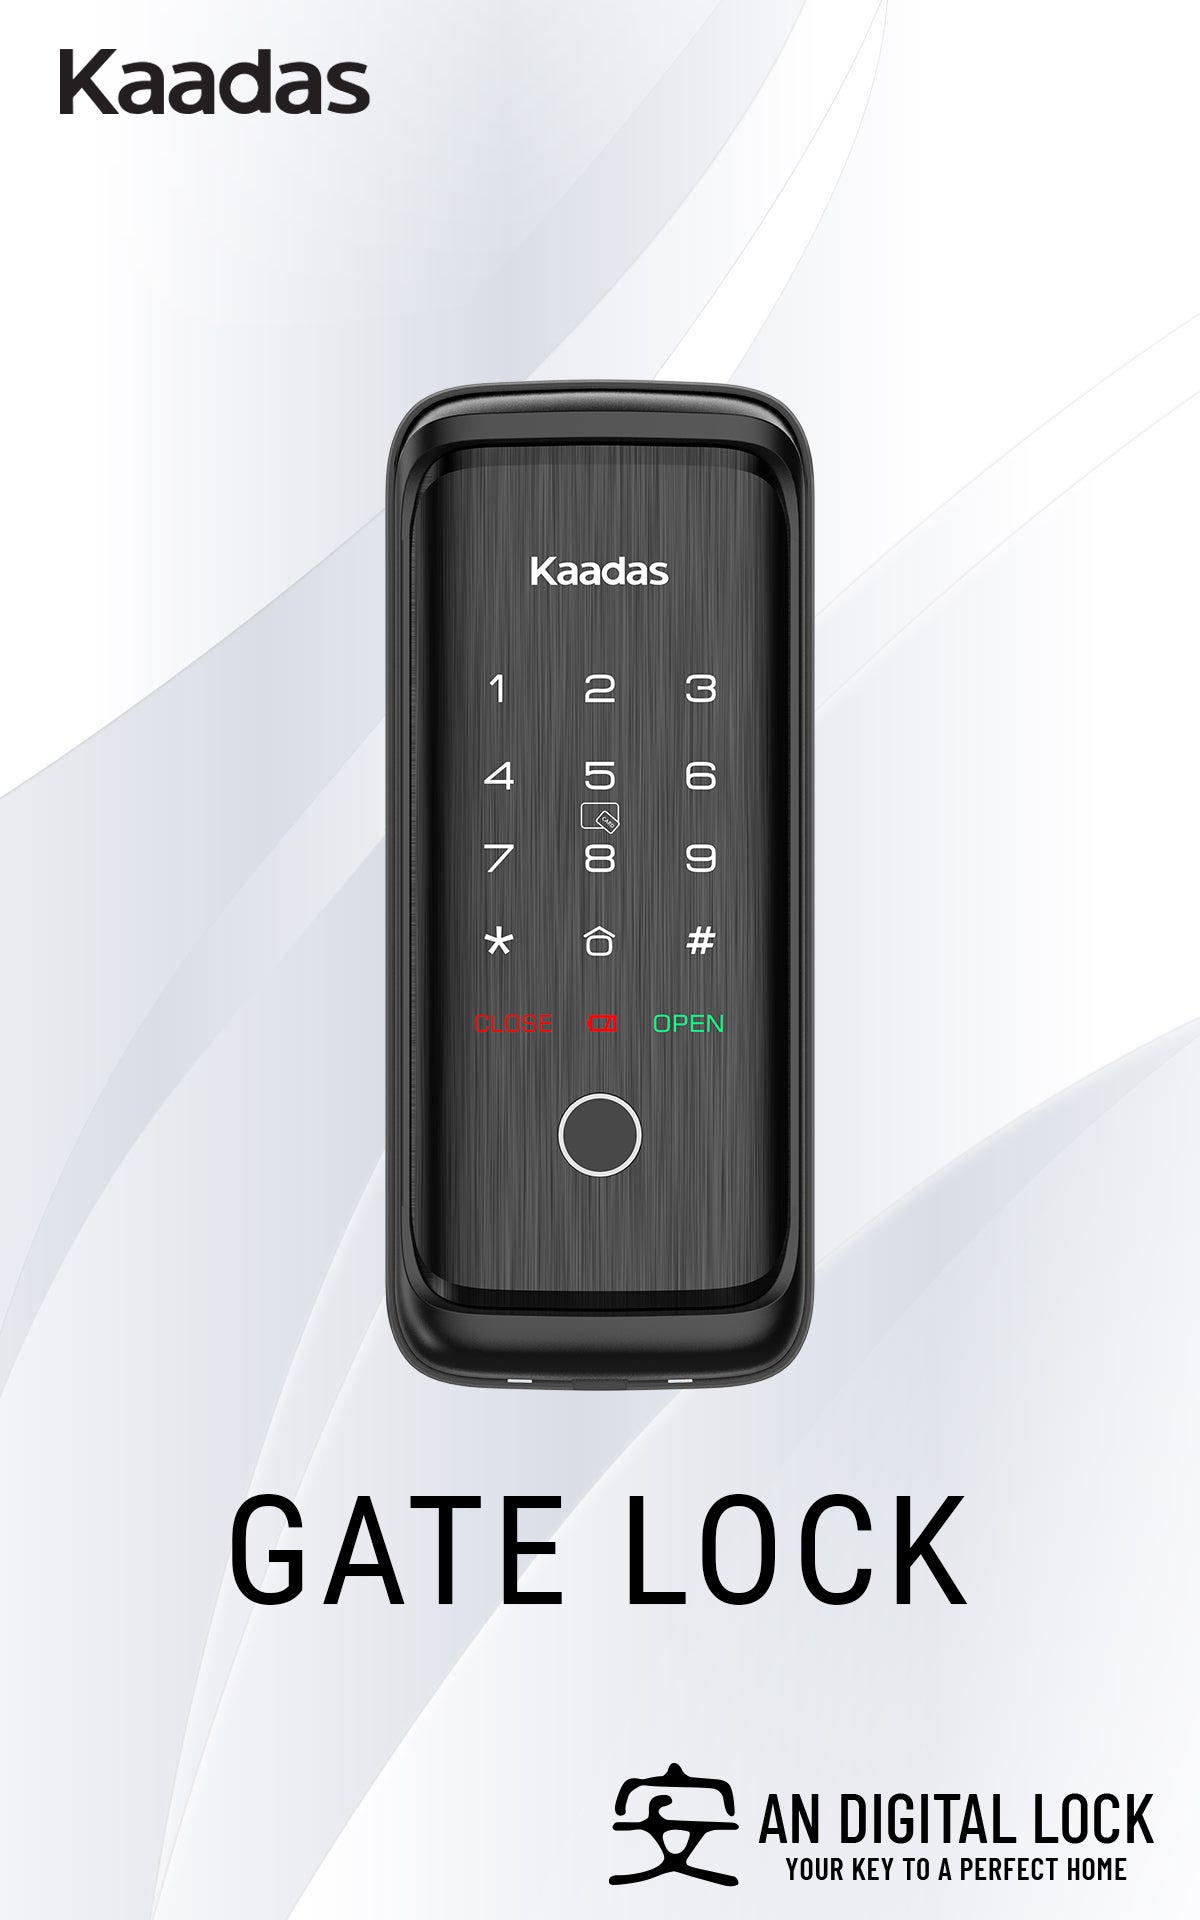 kaadas-r8g-digital-gate-lock